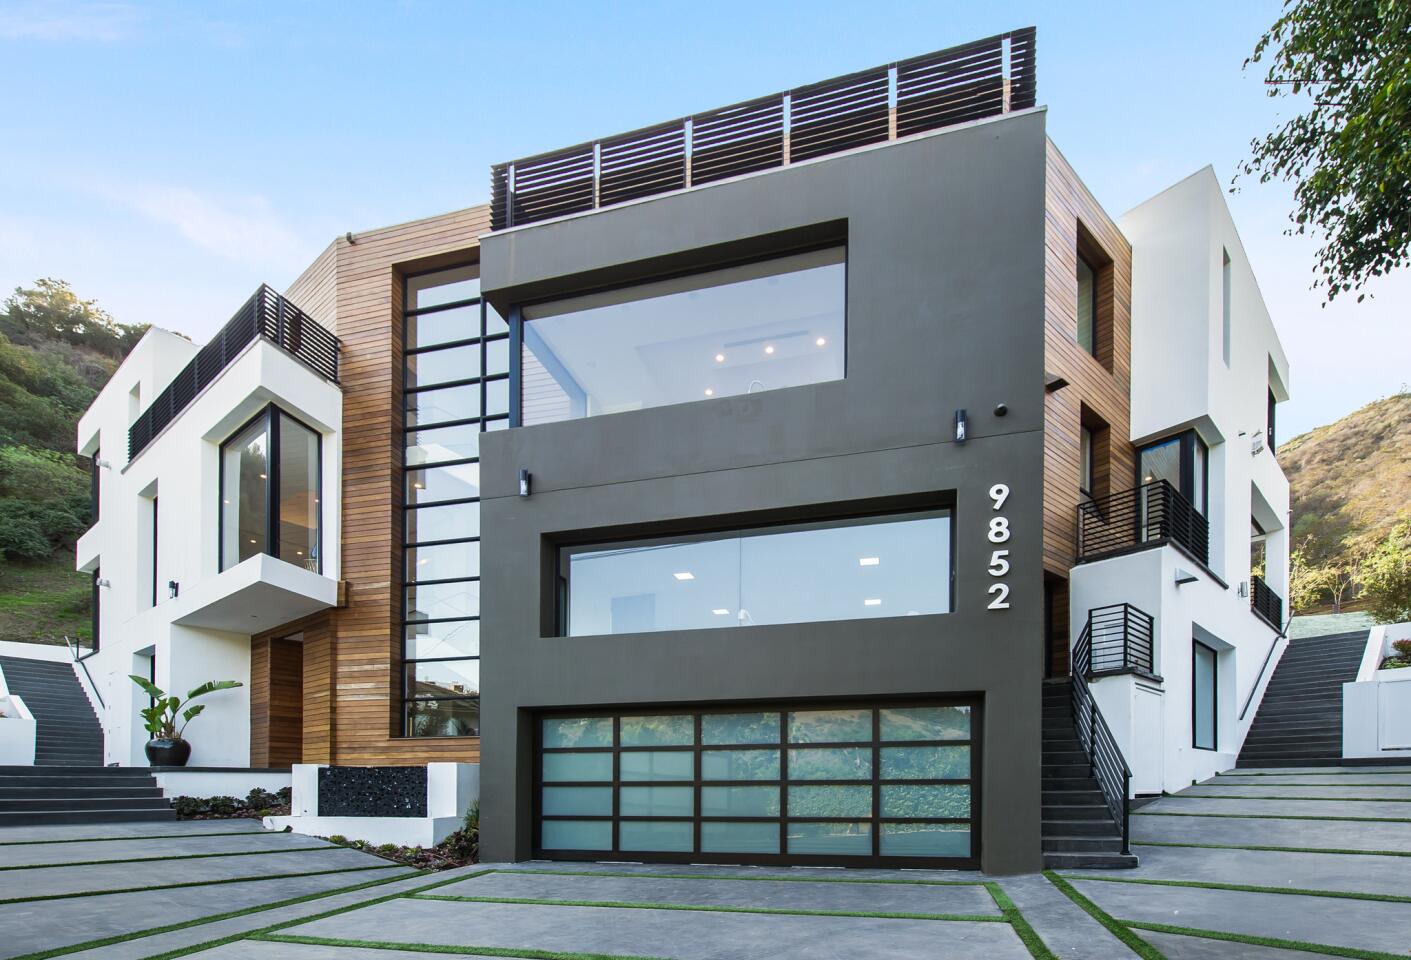 The modular home rises three stories.